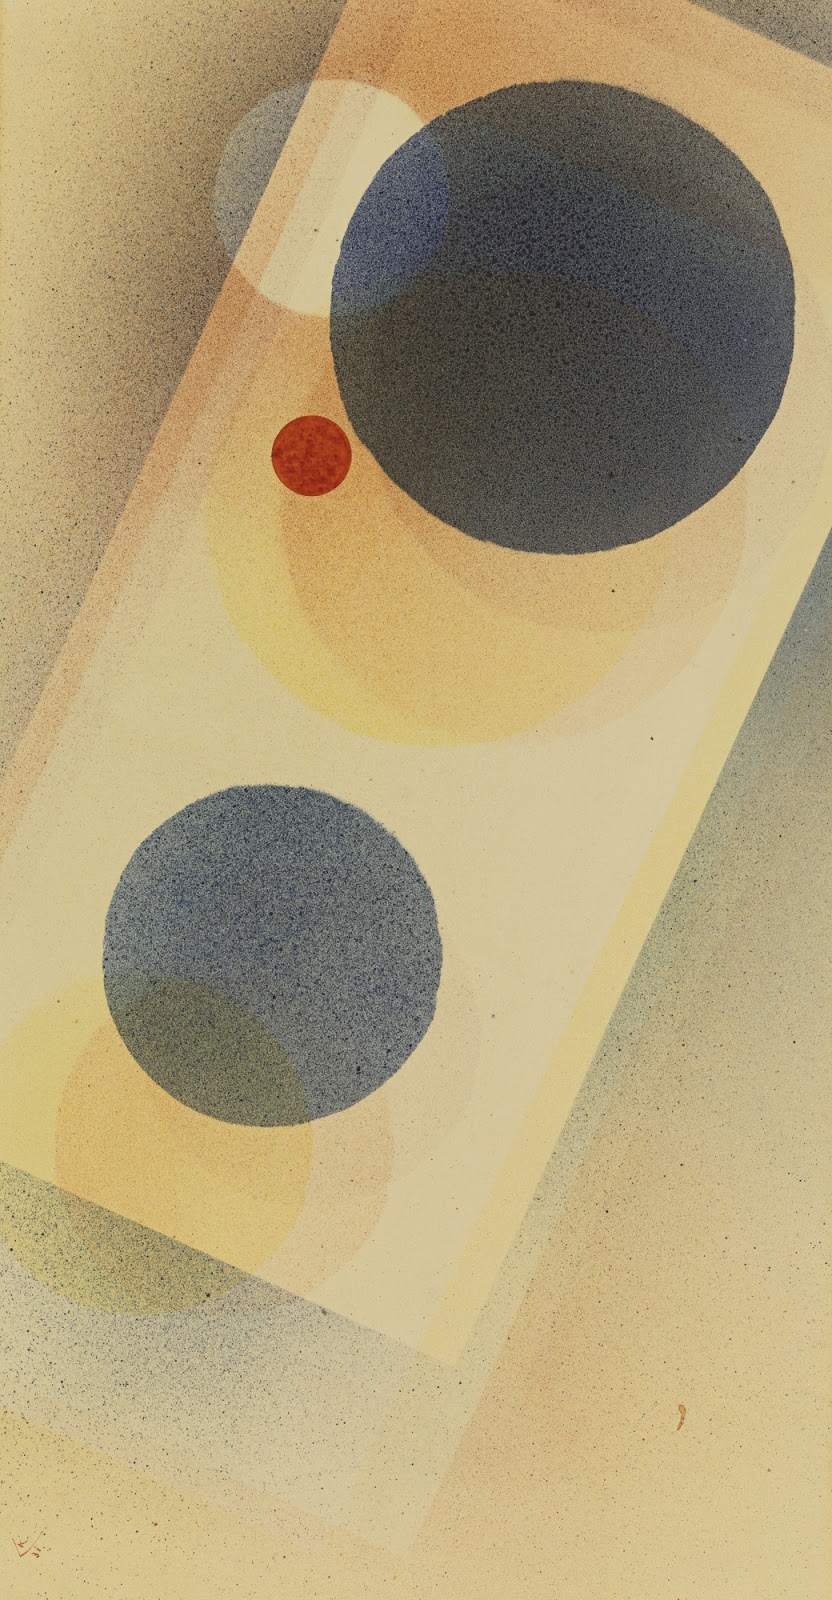 Wassily+Kandinsky-1866-1944 (317).jpg